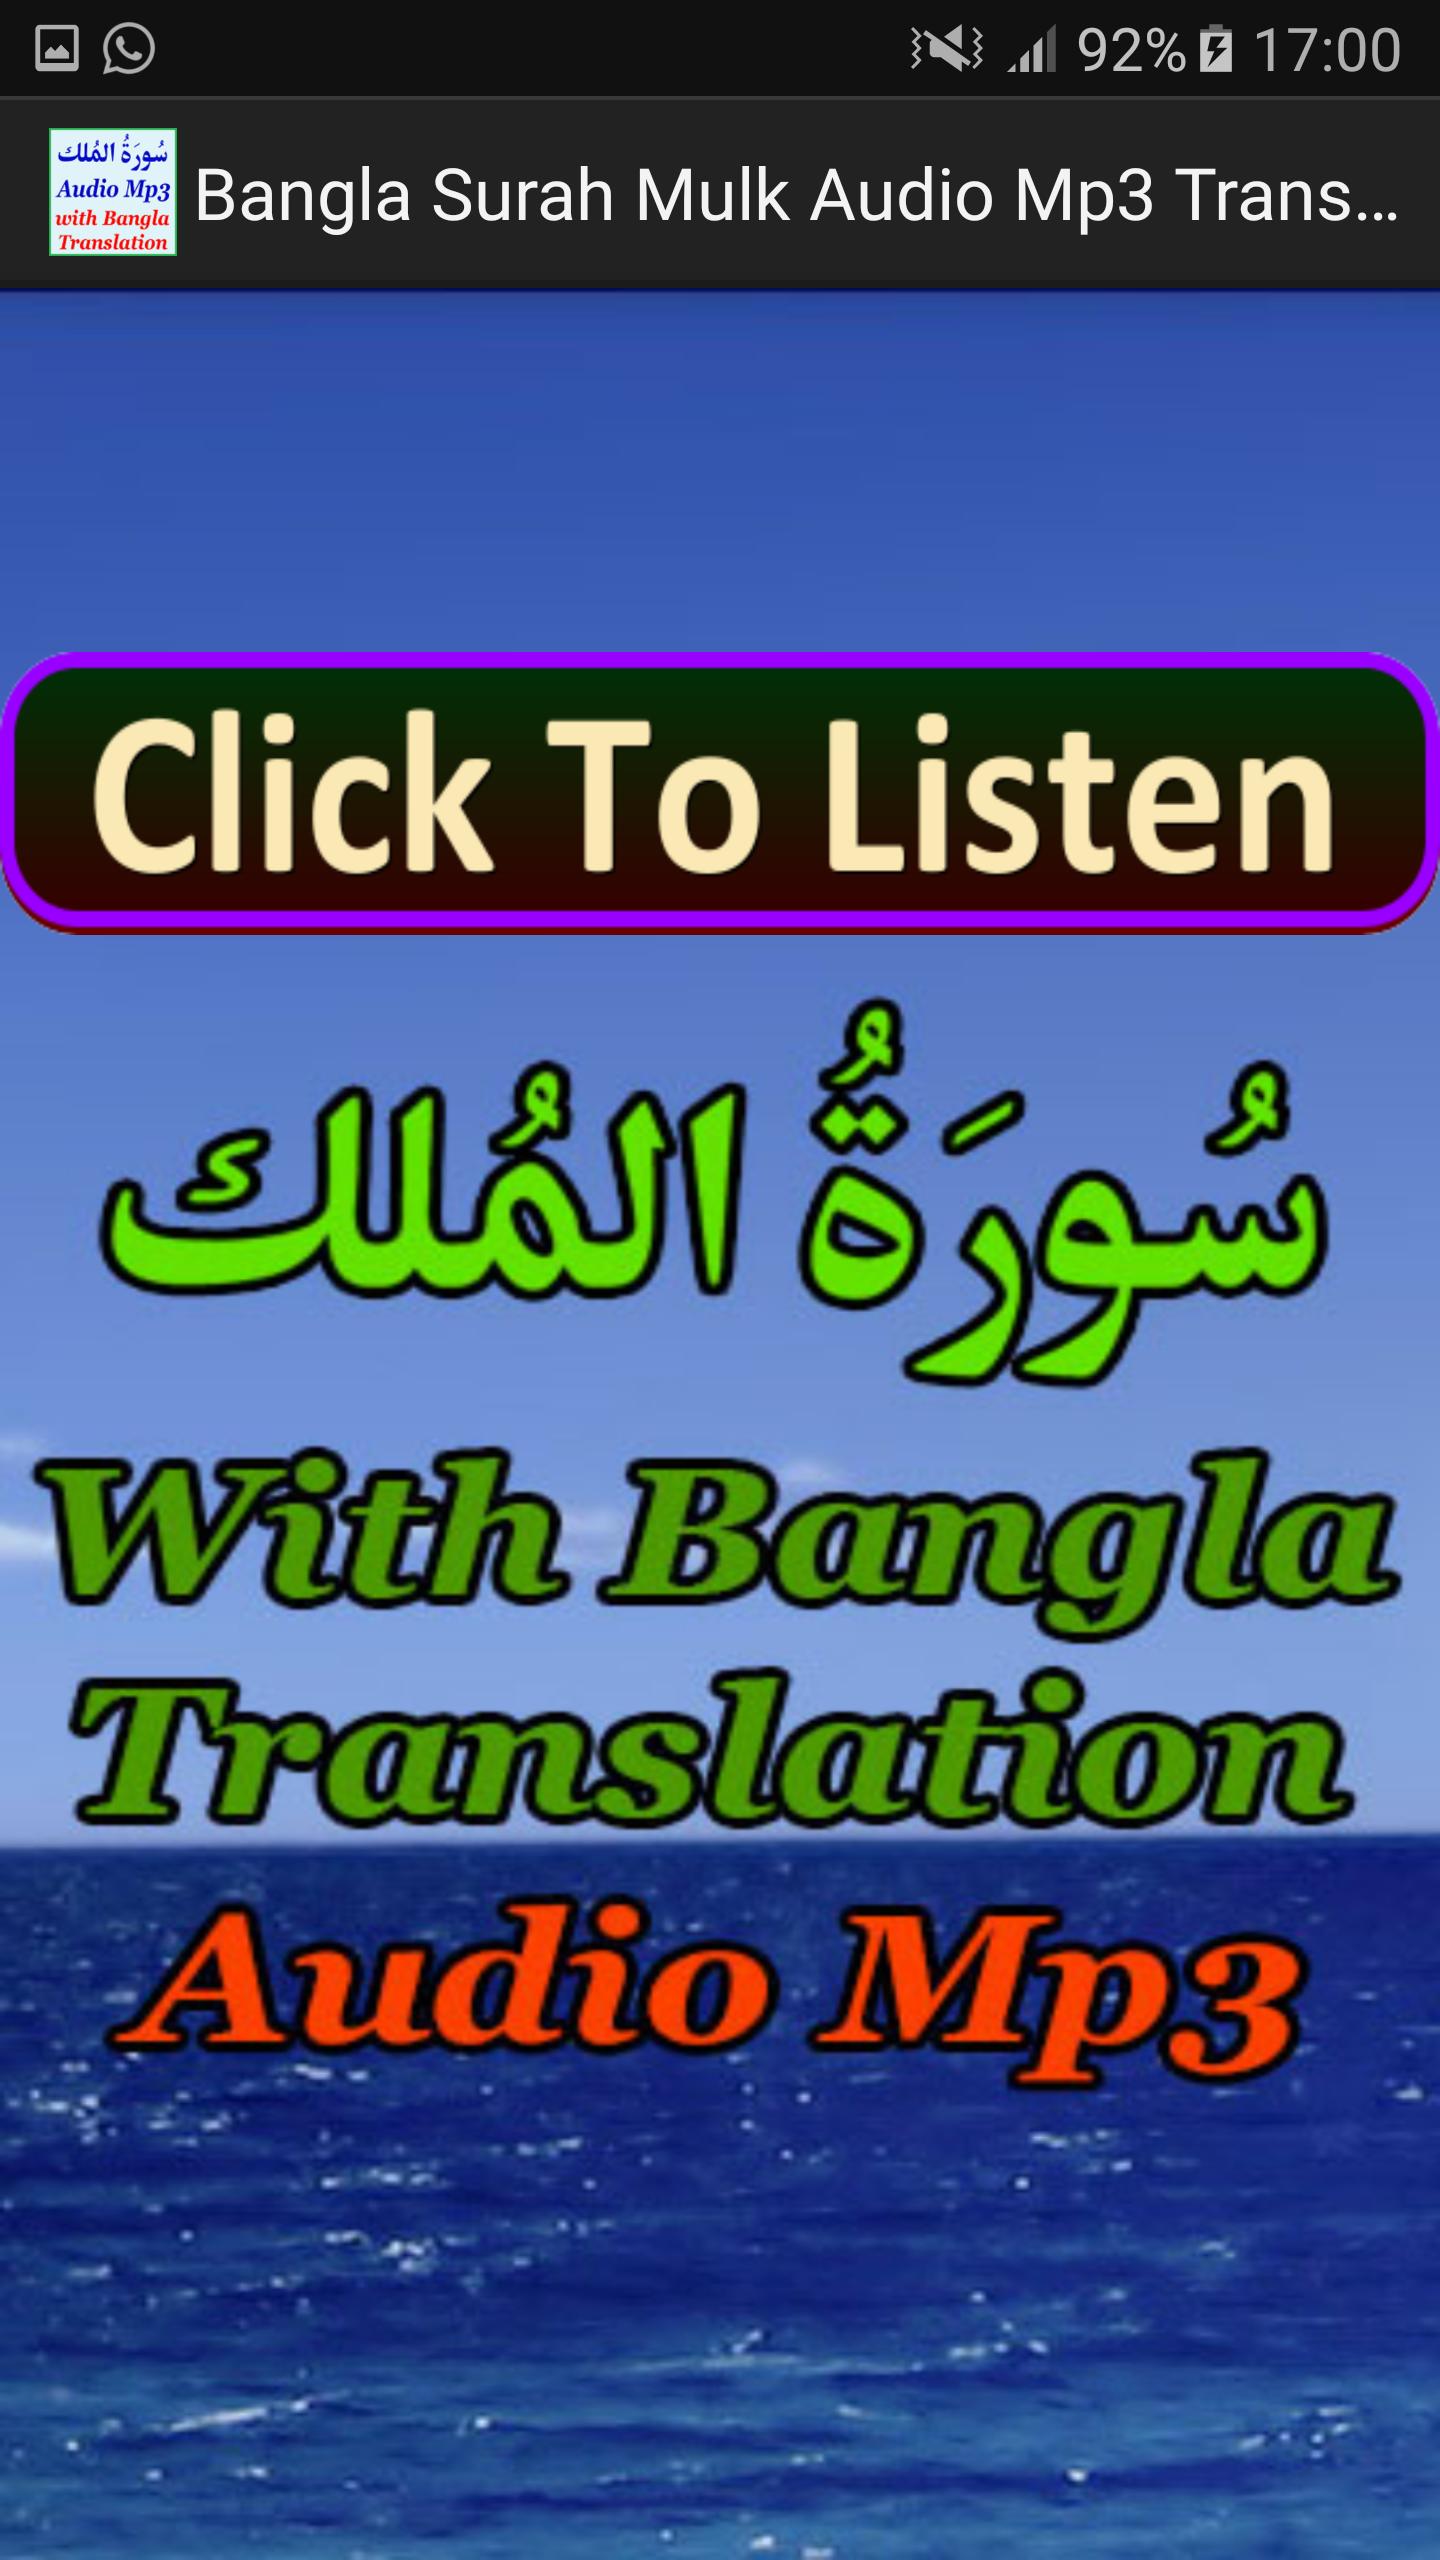 Bangla Surah Mulk Audio Mp3 for Android - APK Download